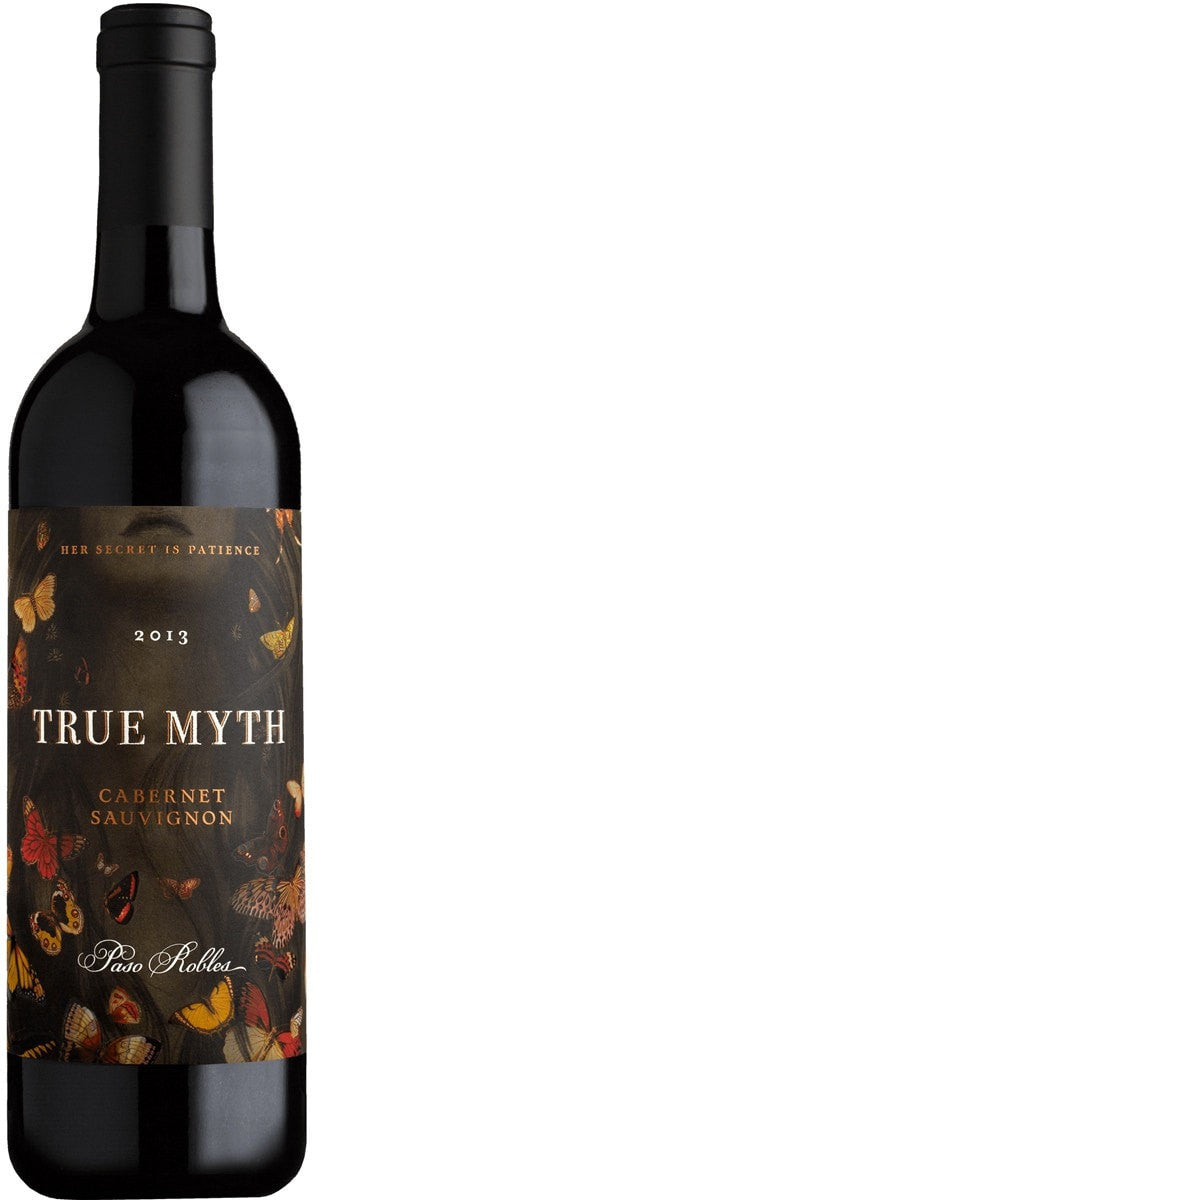 True Myth Cabernet Sauvignon Paso Robles 2014 - true myth cabernet sauvignon